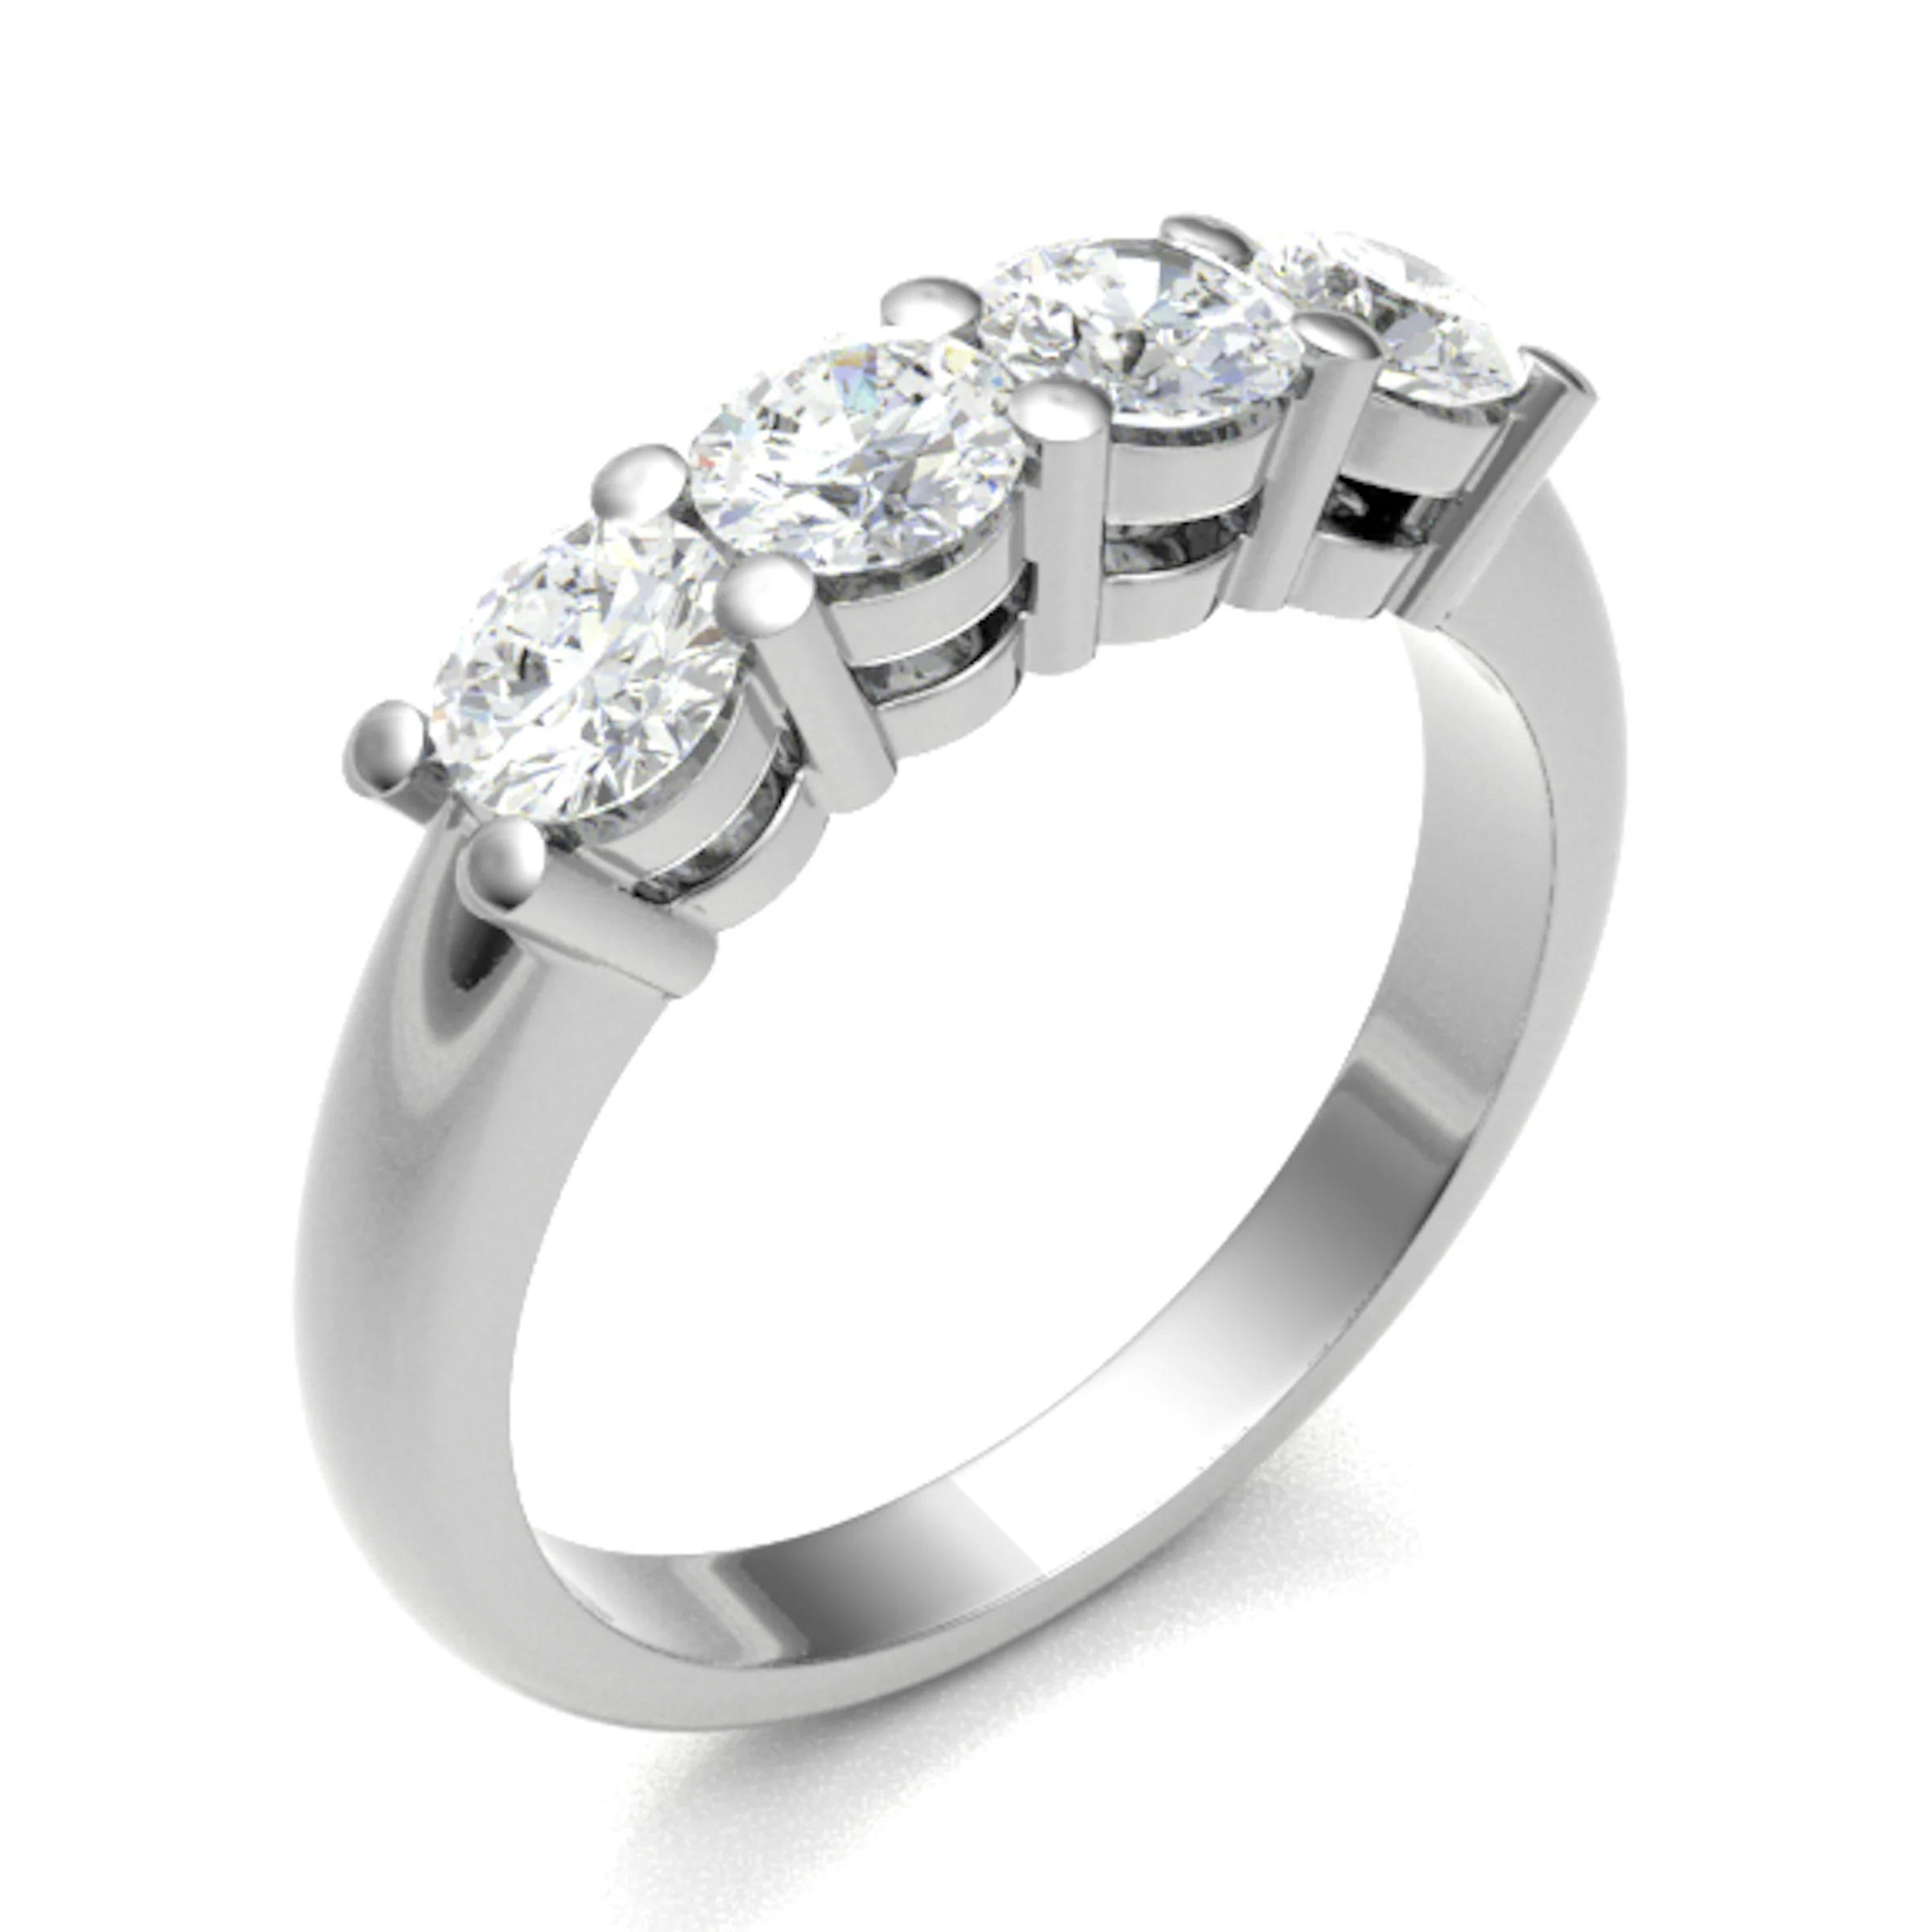 0.40 - 6.00 Carat Lab-Created Anniversary Diamond Rings